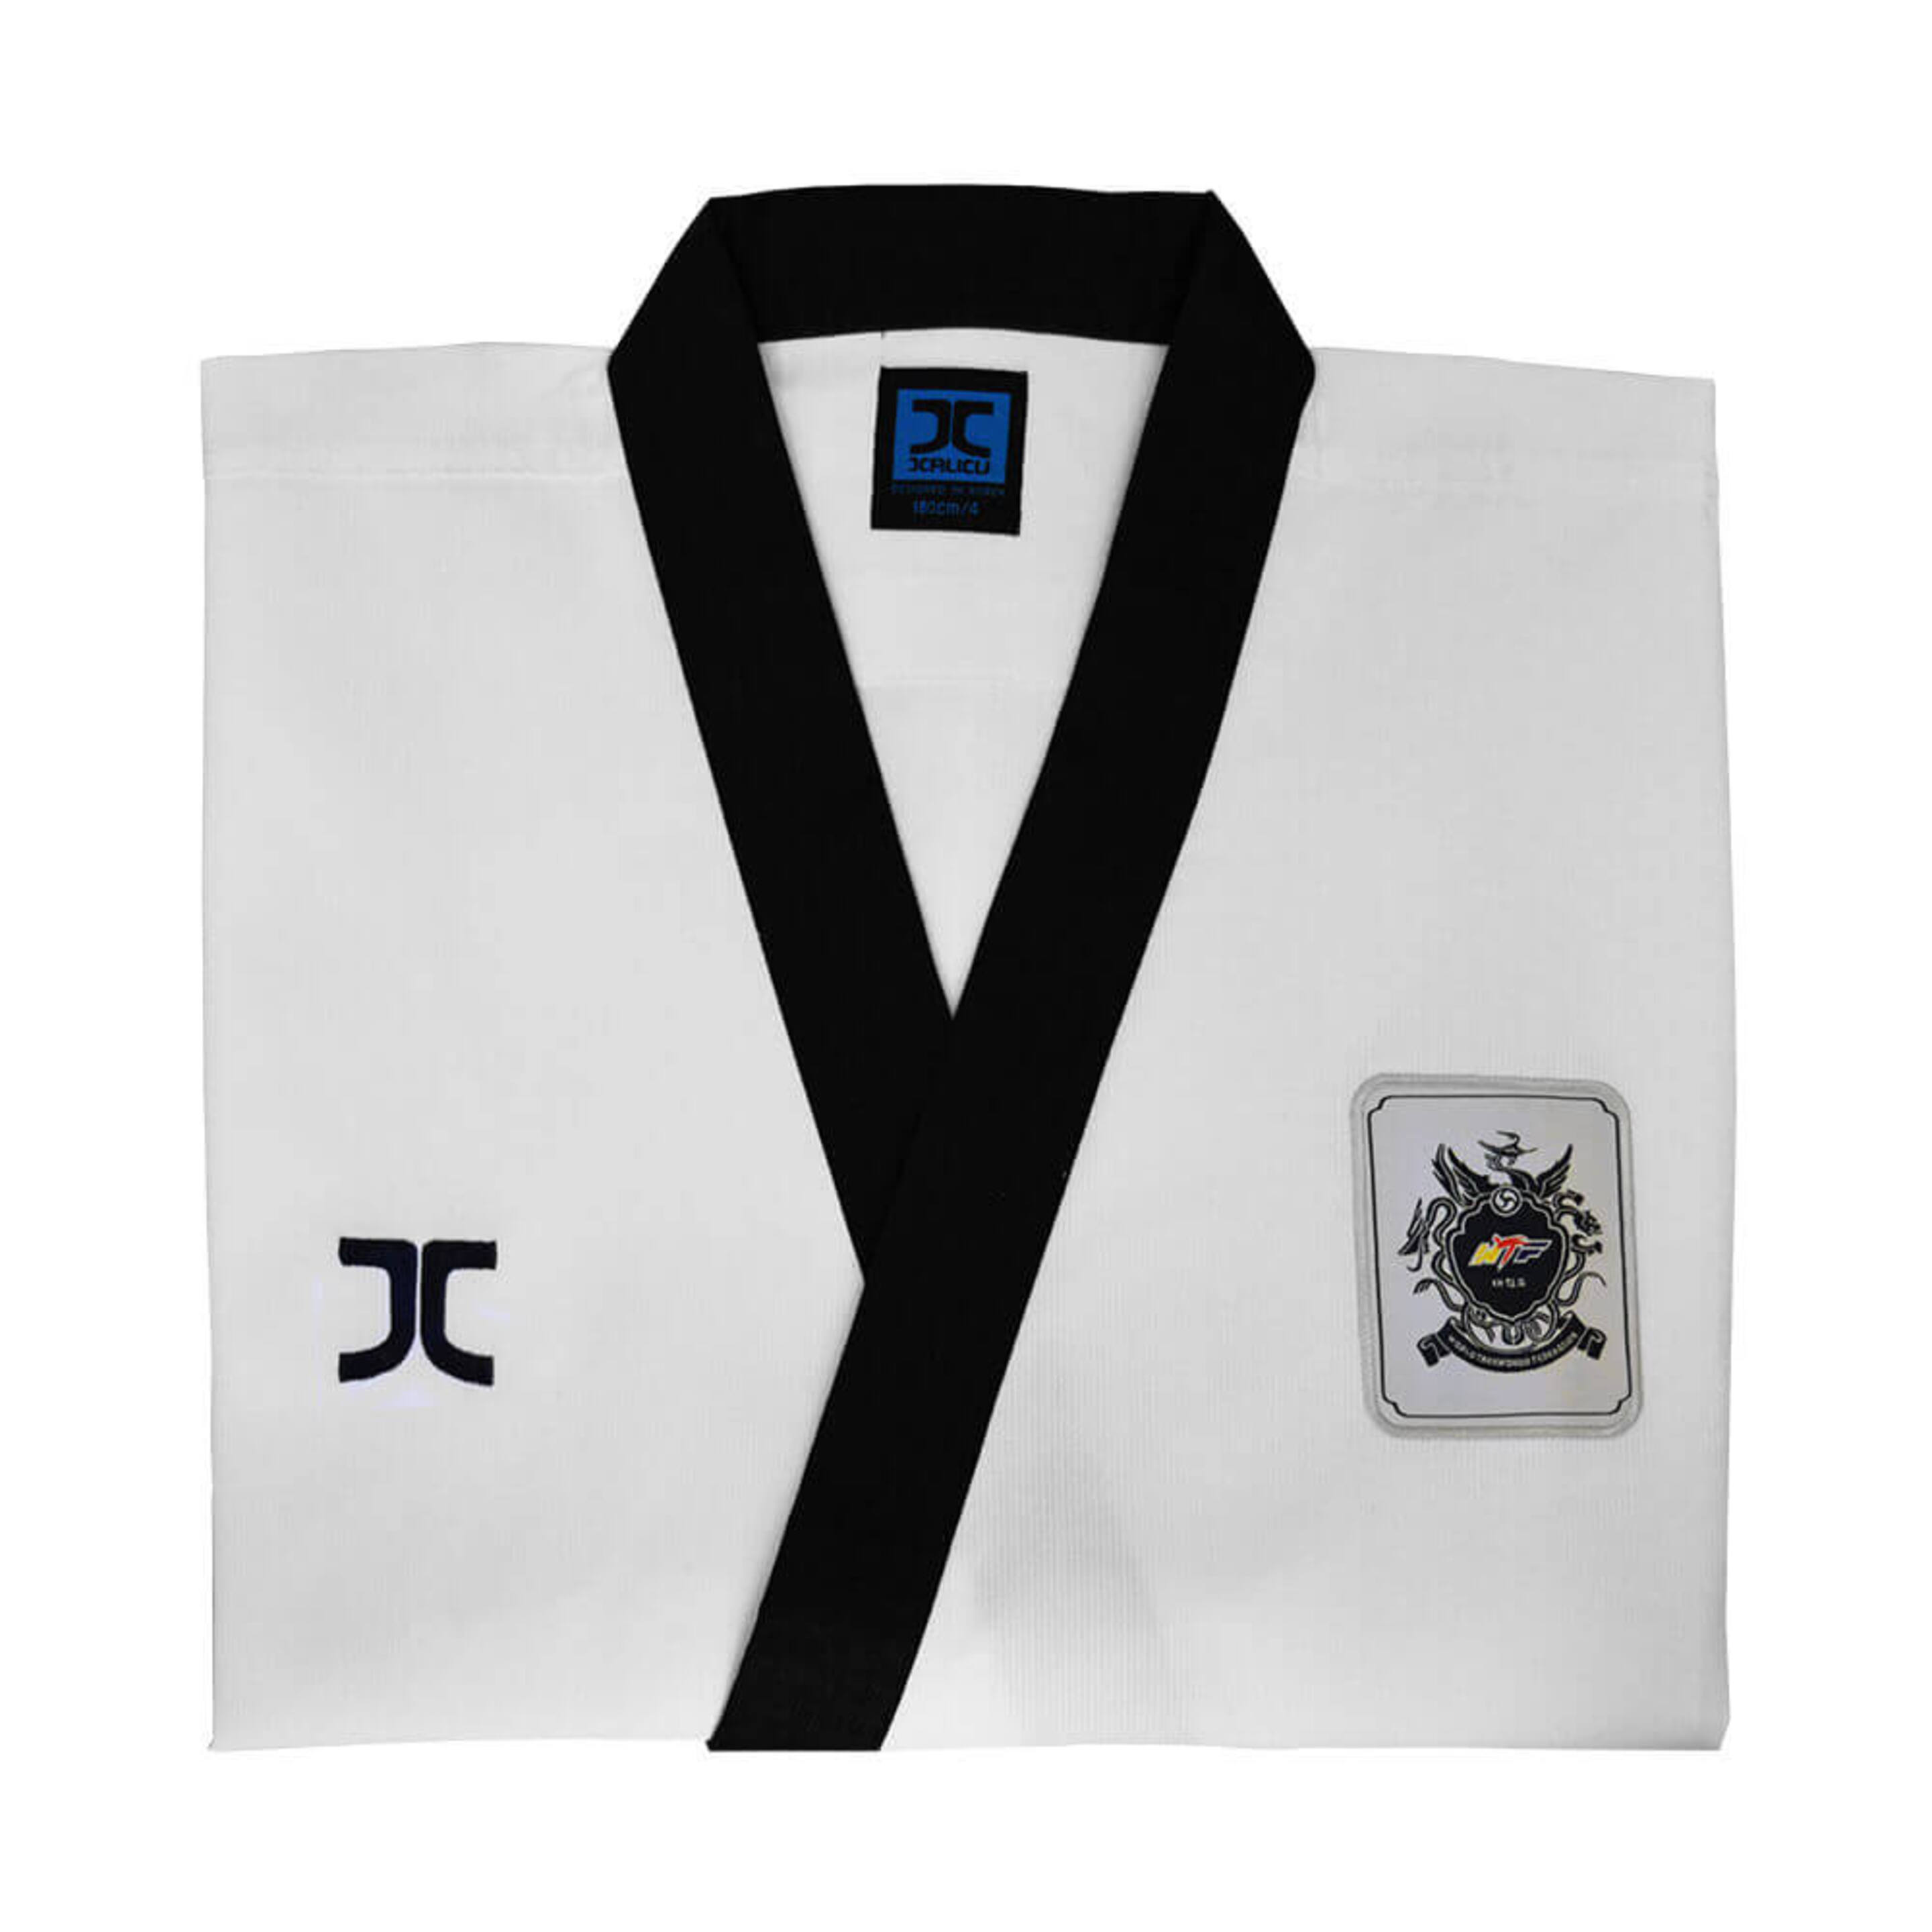 Traje De Taekwondo Jcalicu Poomsae Dan - Blanco/Negro  MKP